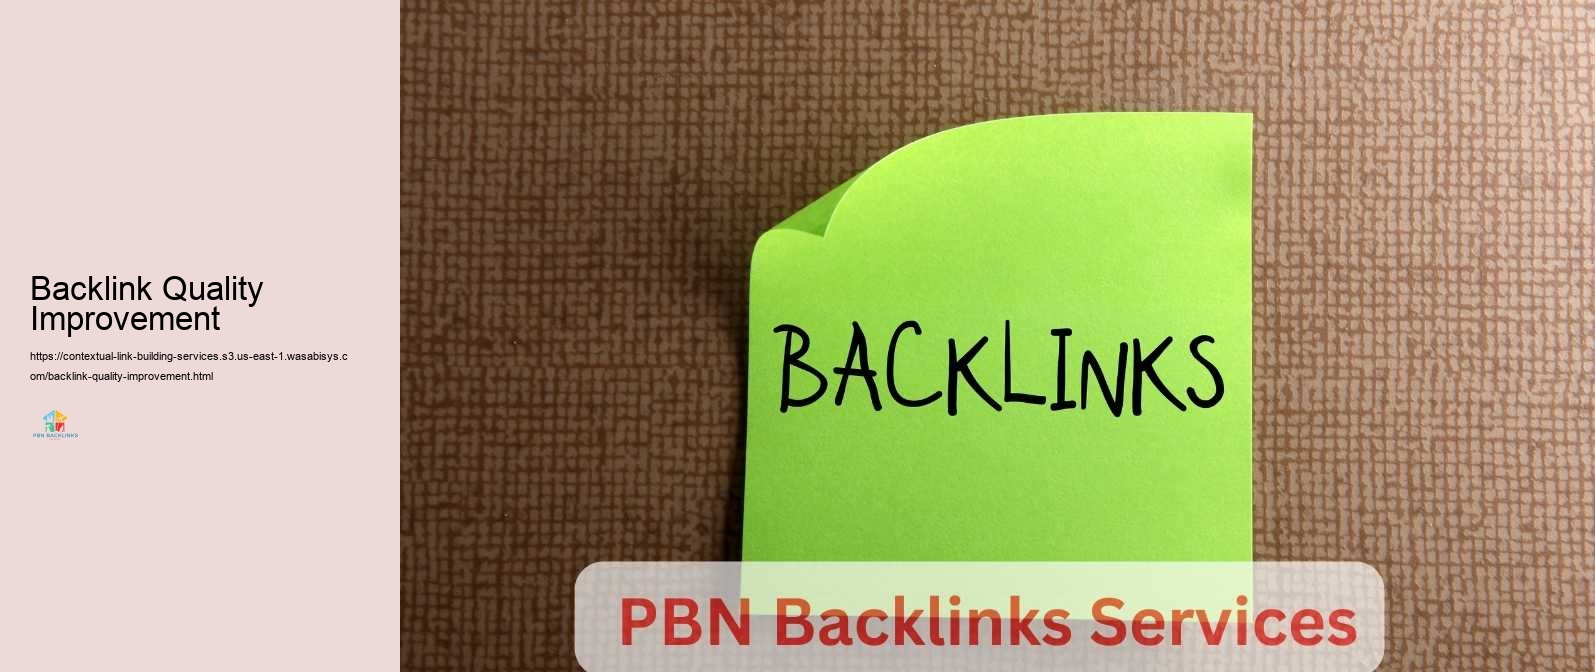 Backlink Quality Improvement